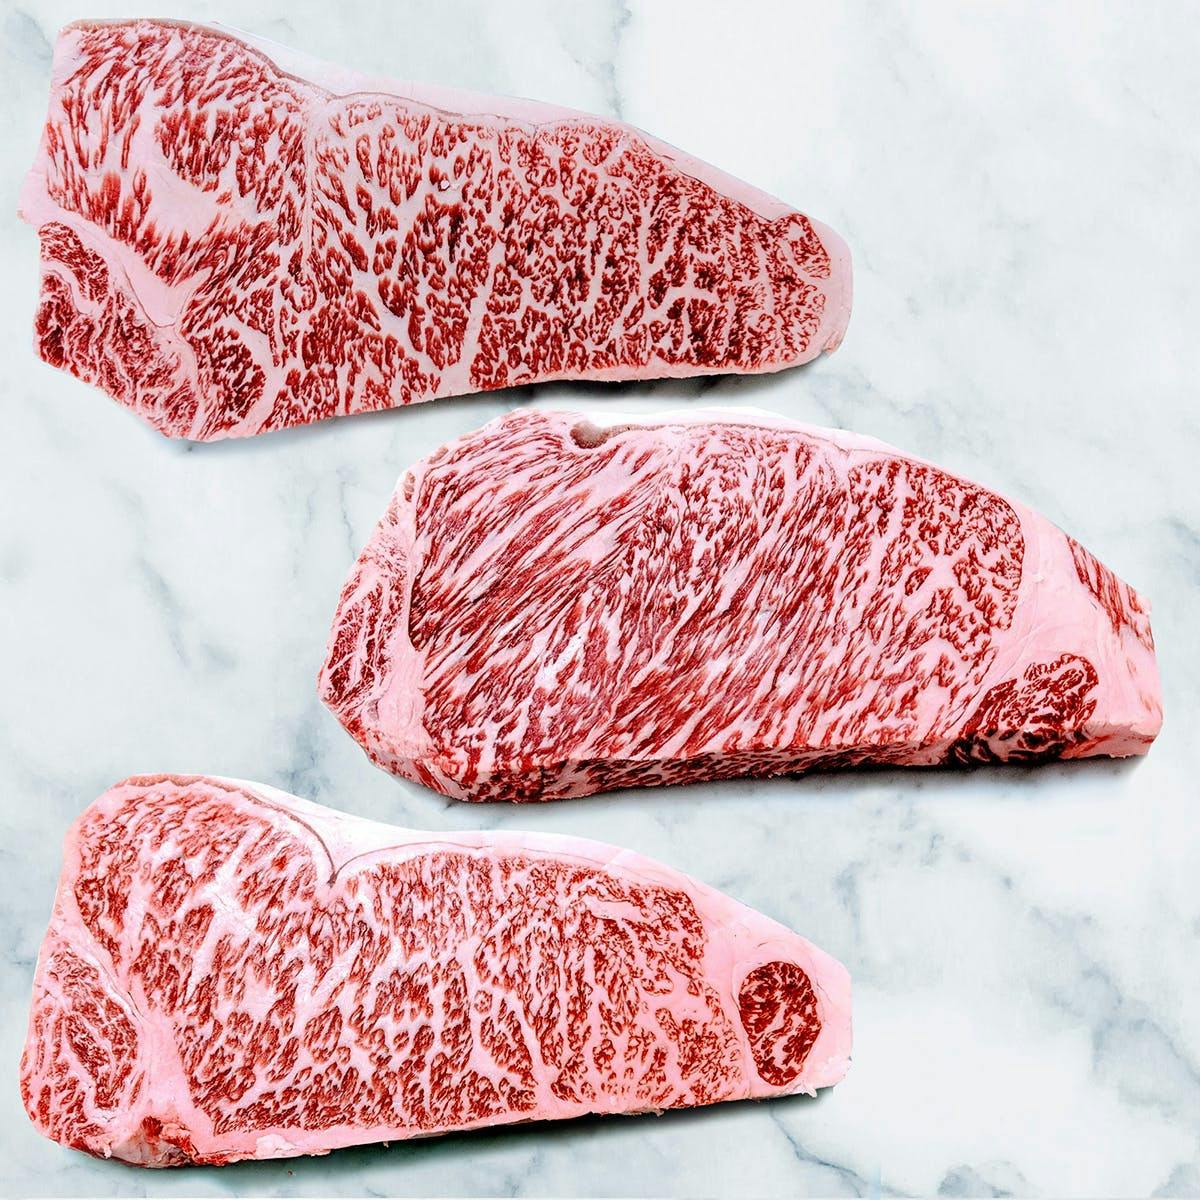 Wagyu Kobe Beef Style - Buy Online Overnight 